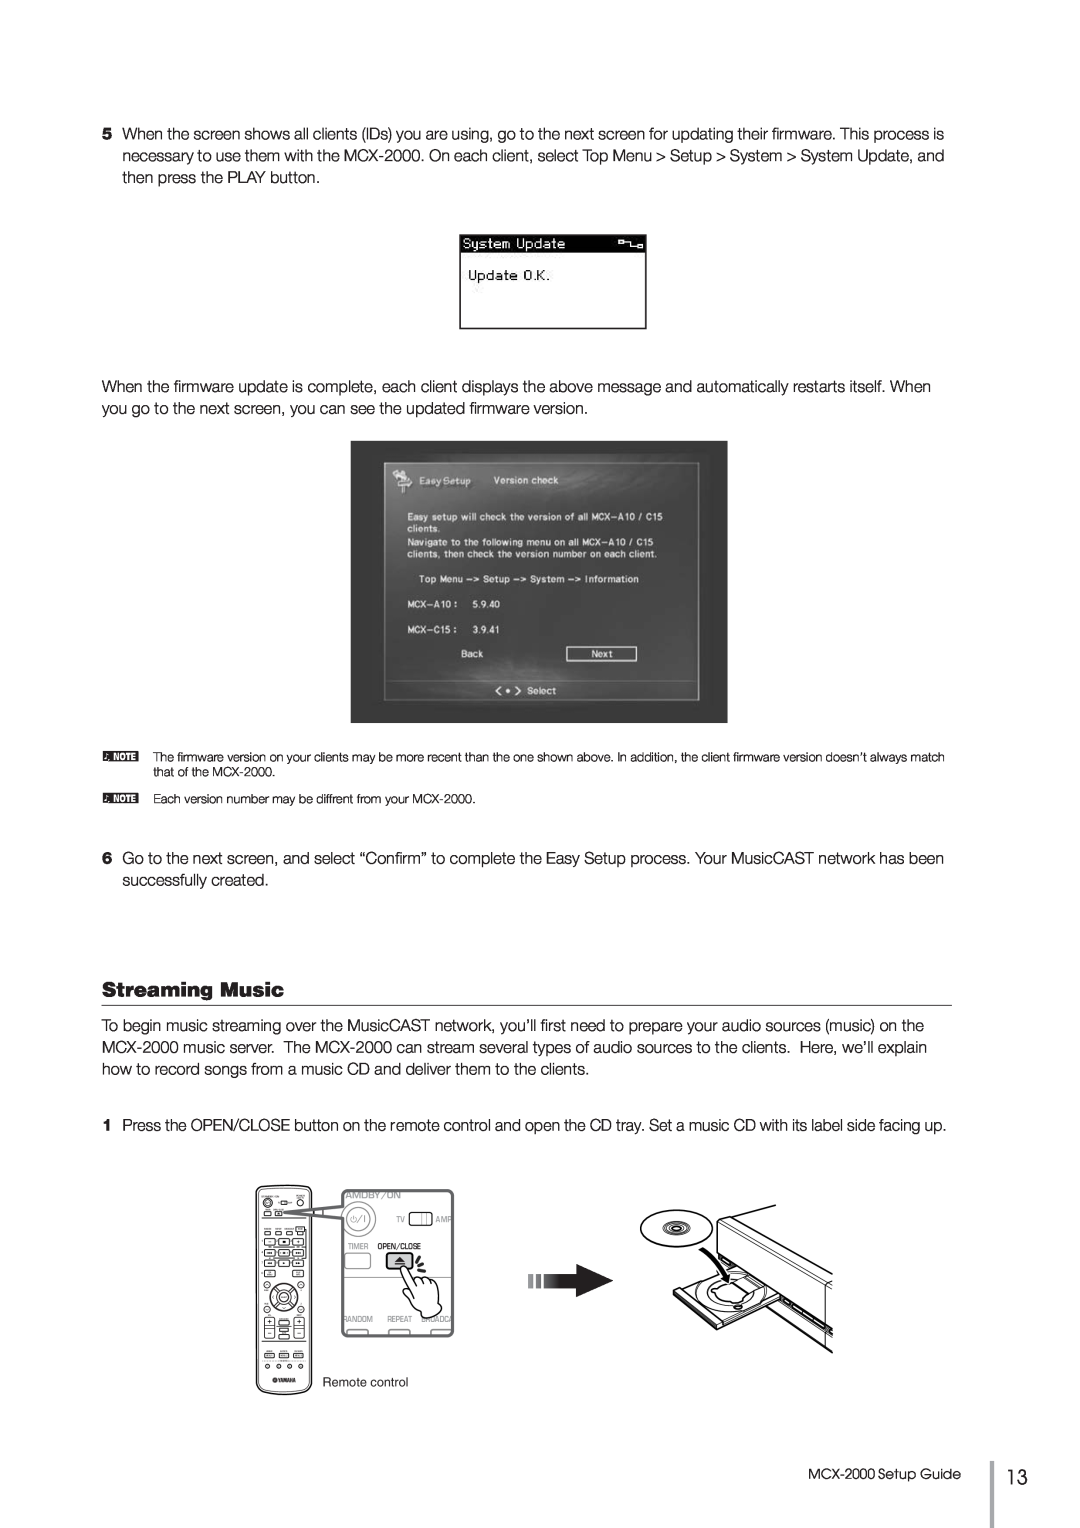 Yamaha MCX-2000 setup guide Streaming Music, Remote control 